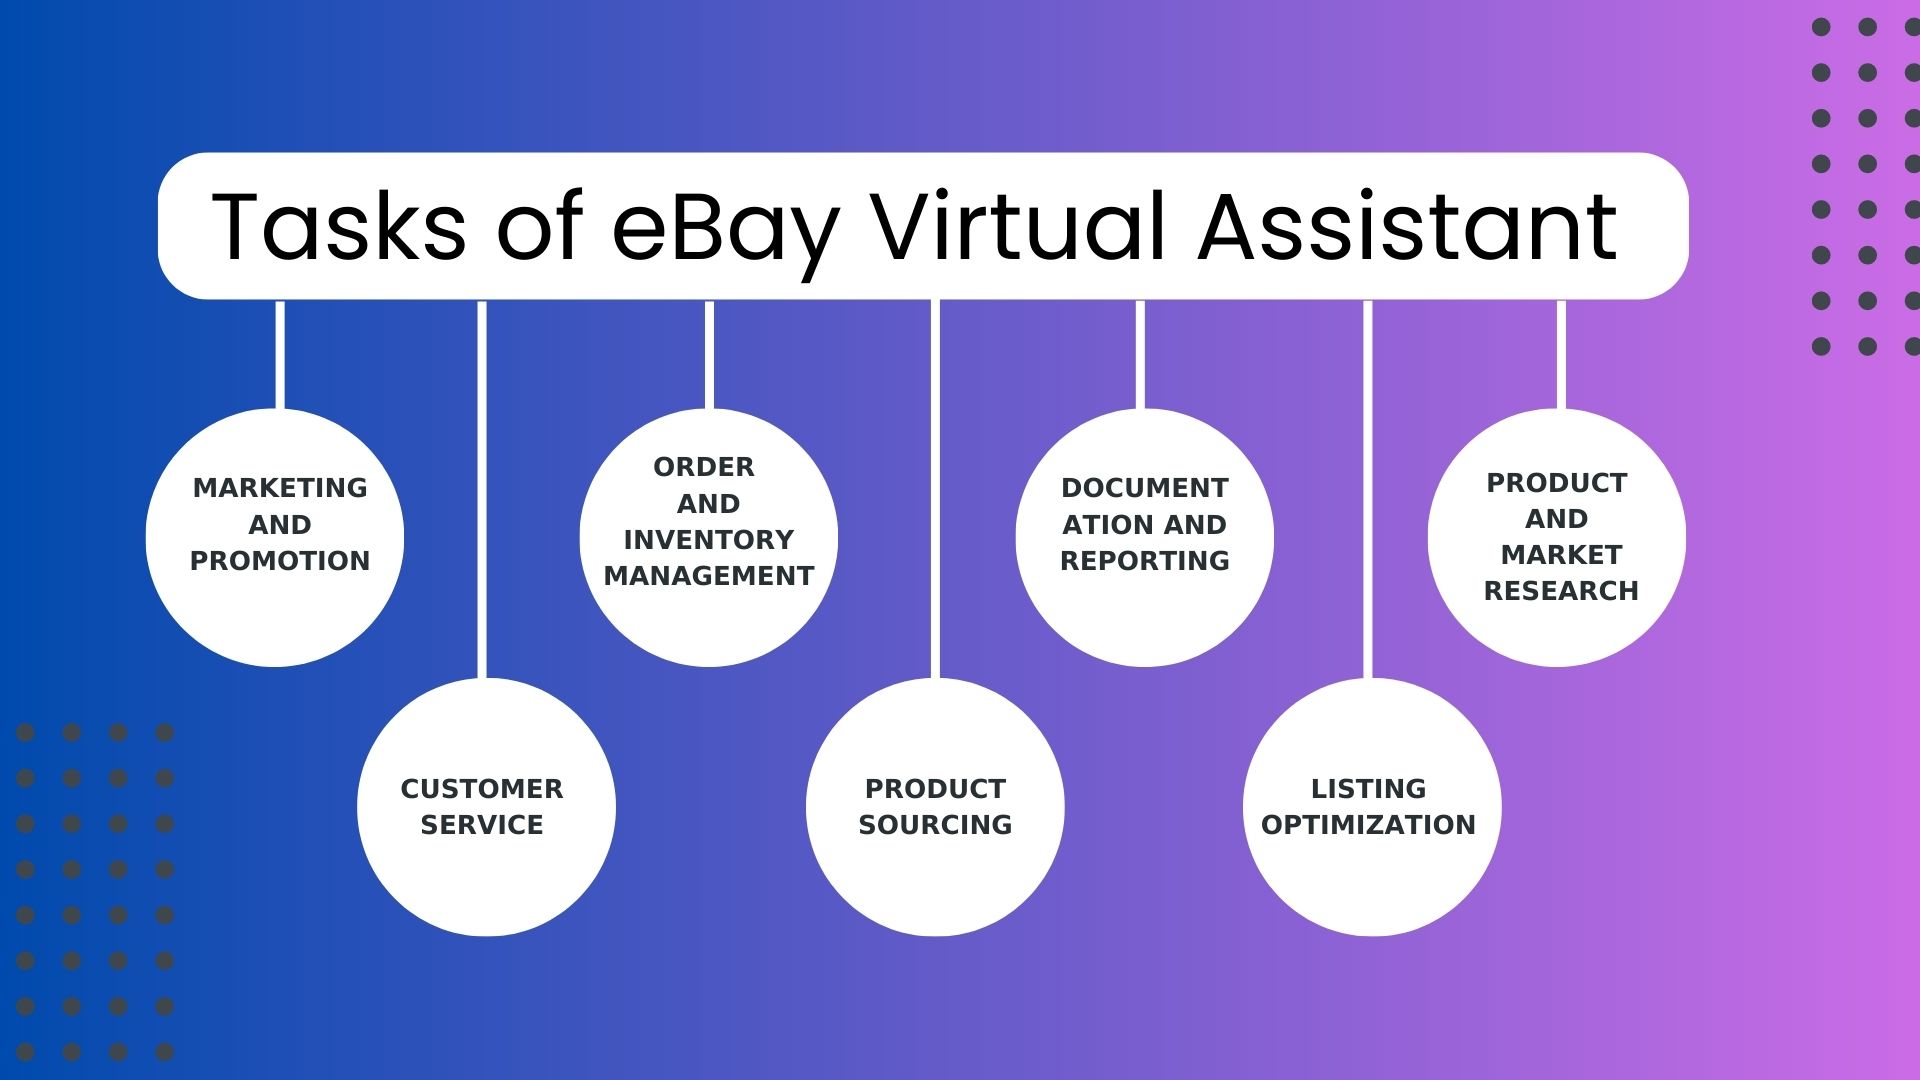 Tasks of eBay virtual assistant